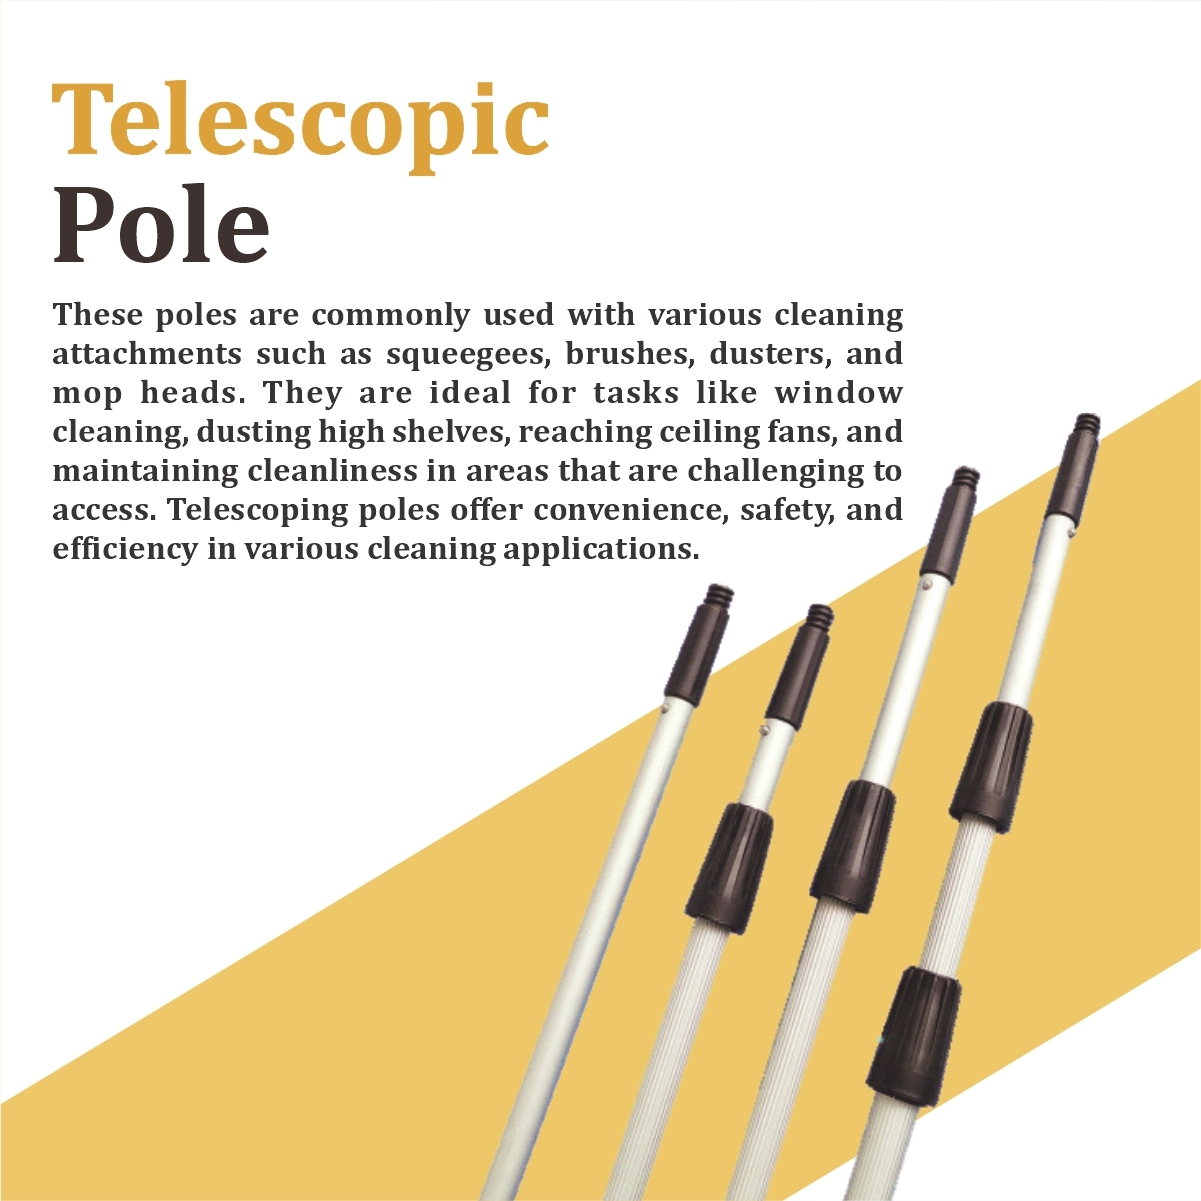 Telescopic Pole-3Level 3.6m